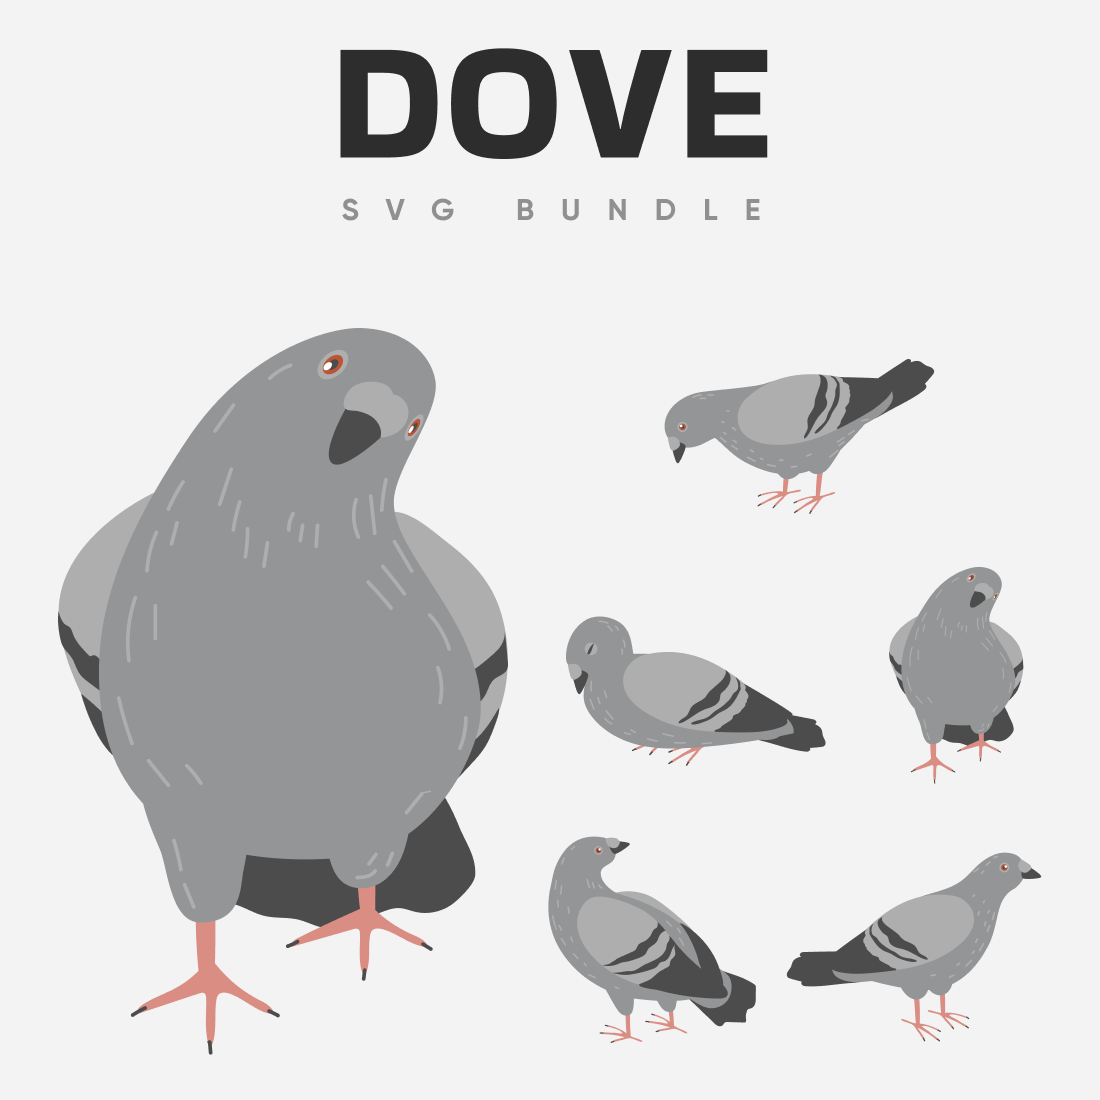 True dove SVG bundle.